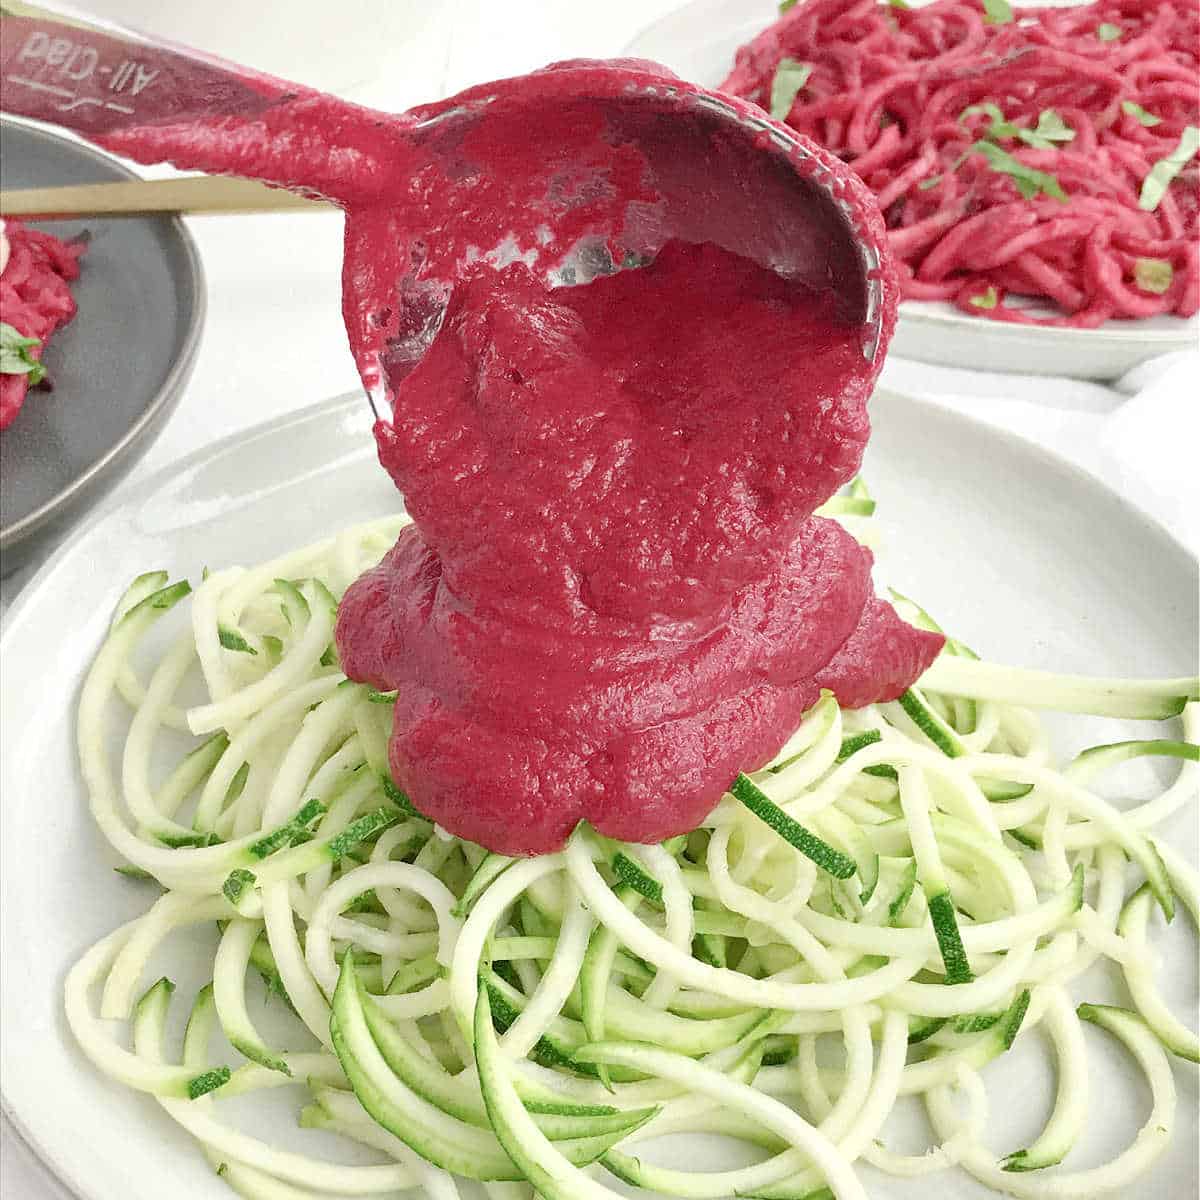 Ladling sauce onto a plate of zucchini pasta.